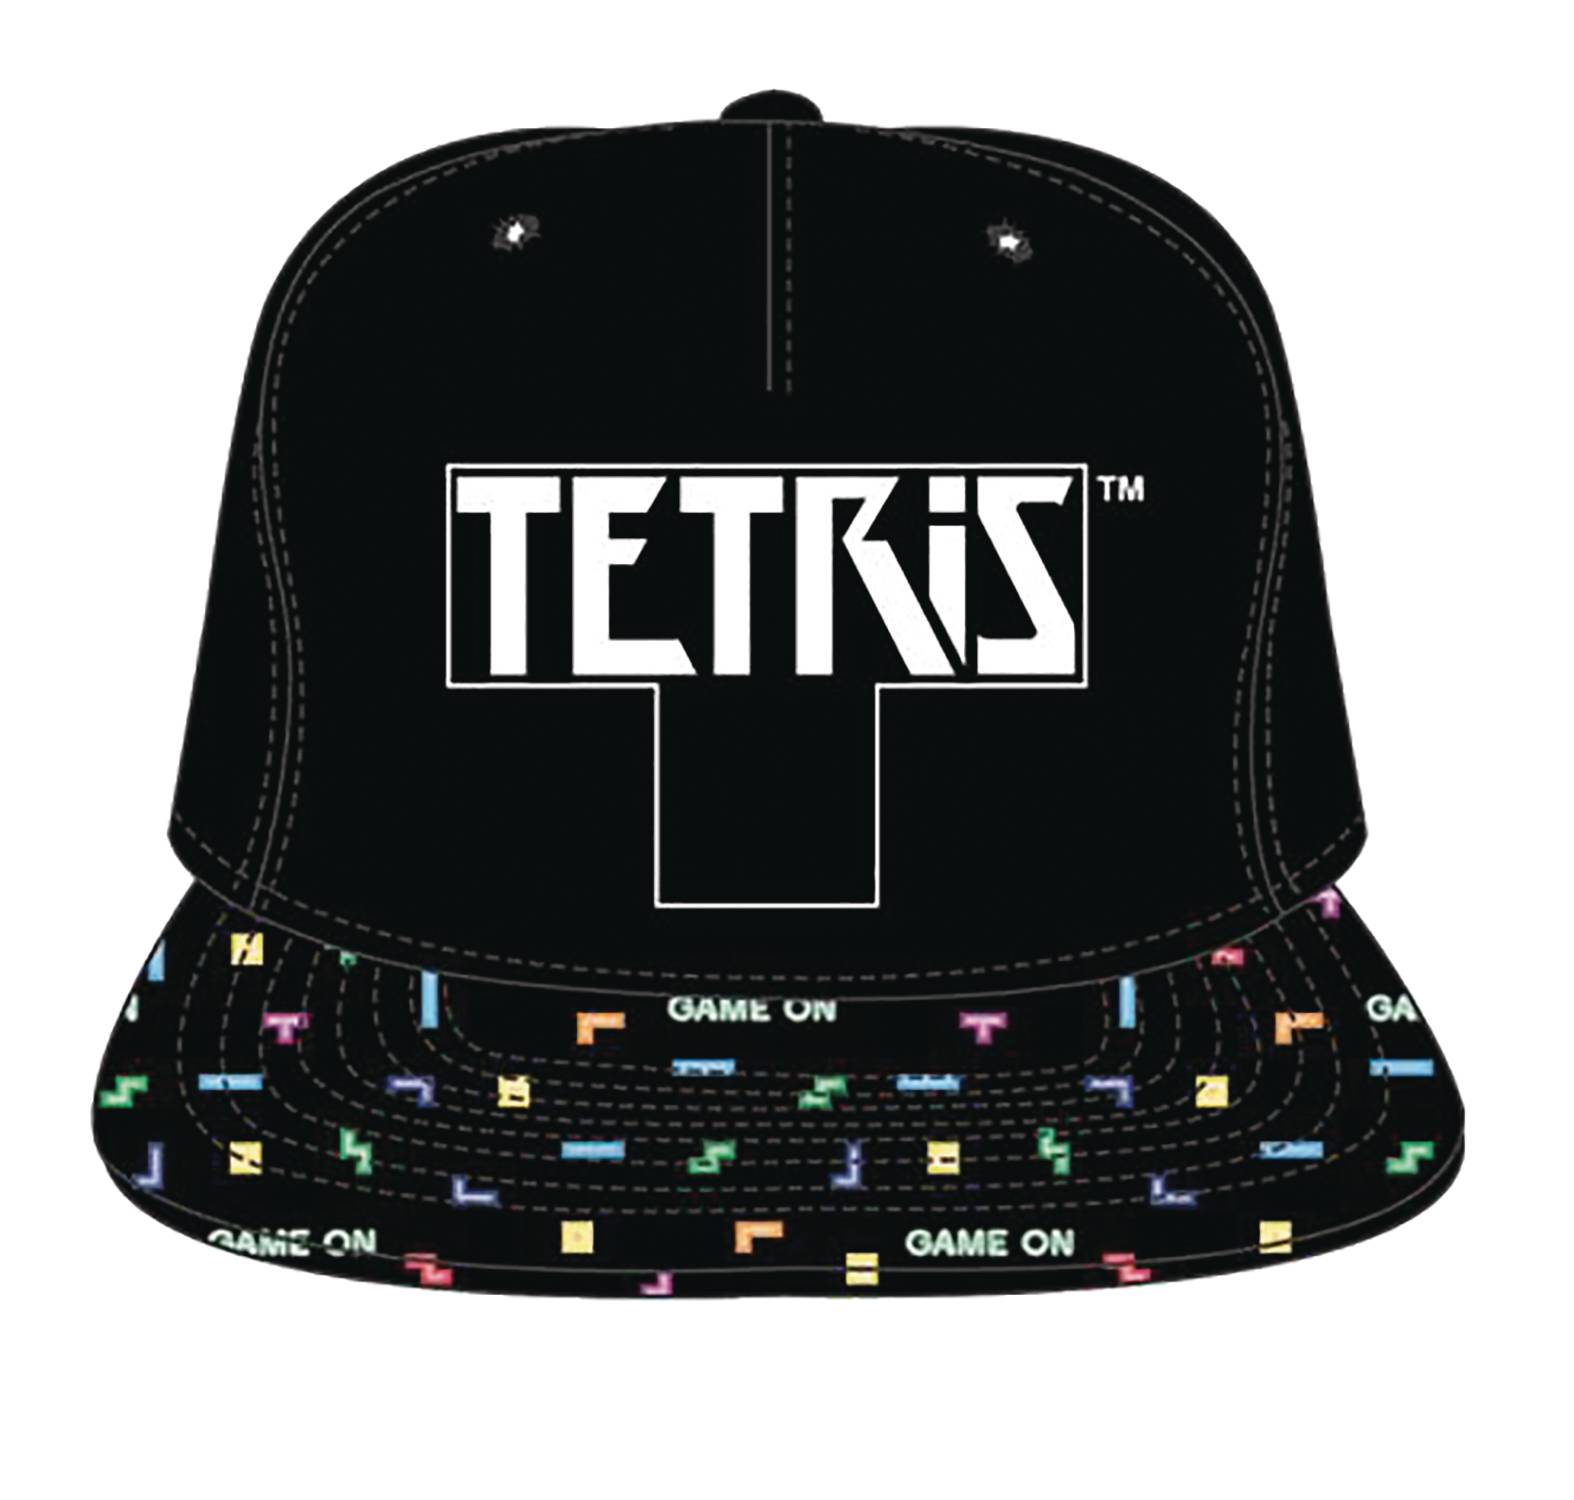 TETRIS BLOCKS BLACK SNAP-BACK CAP